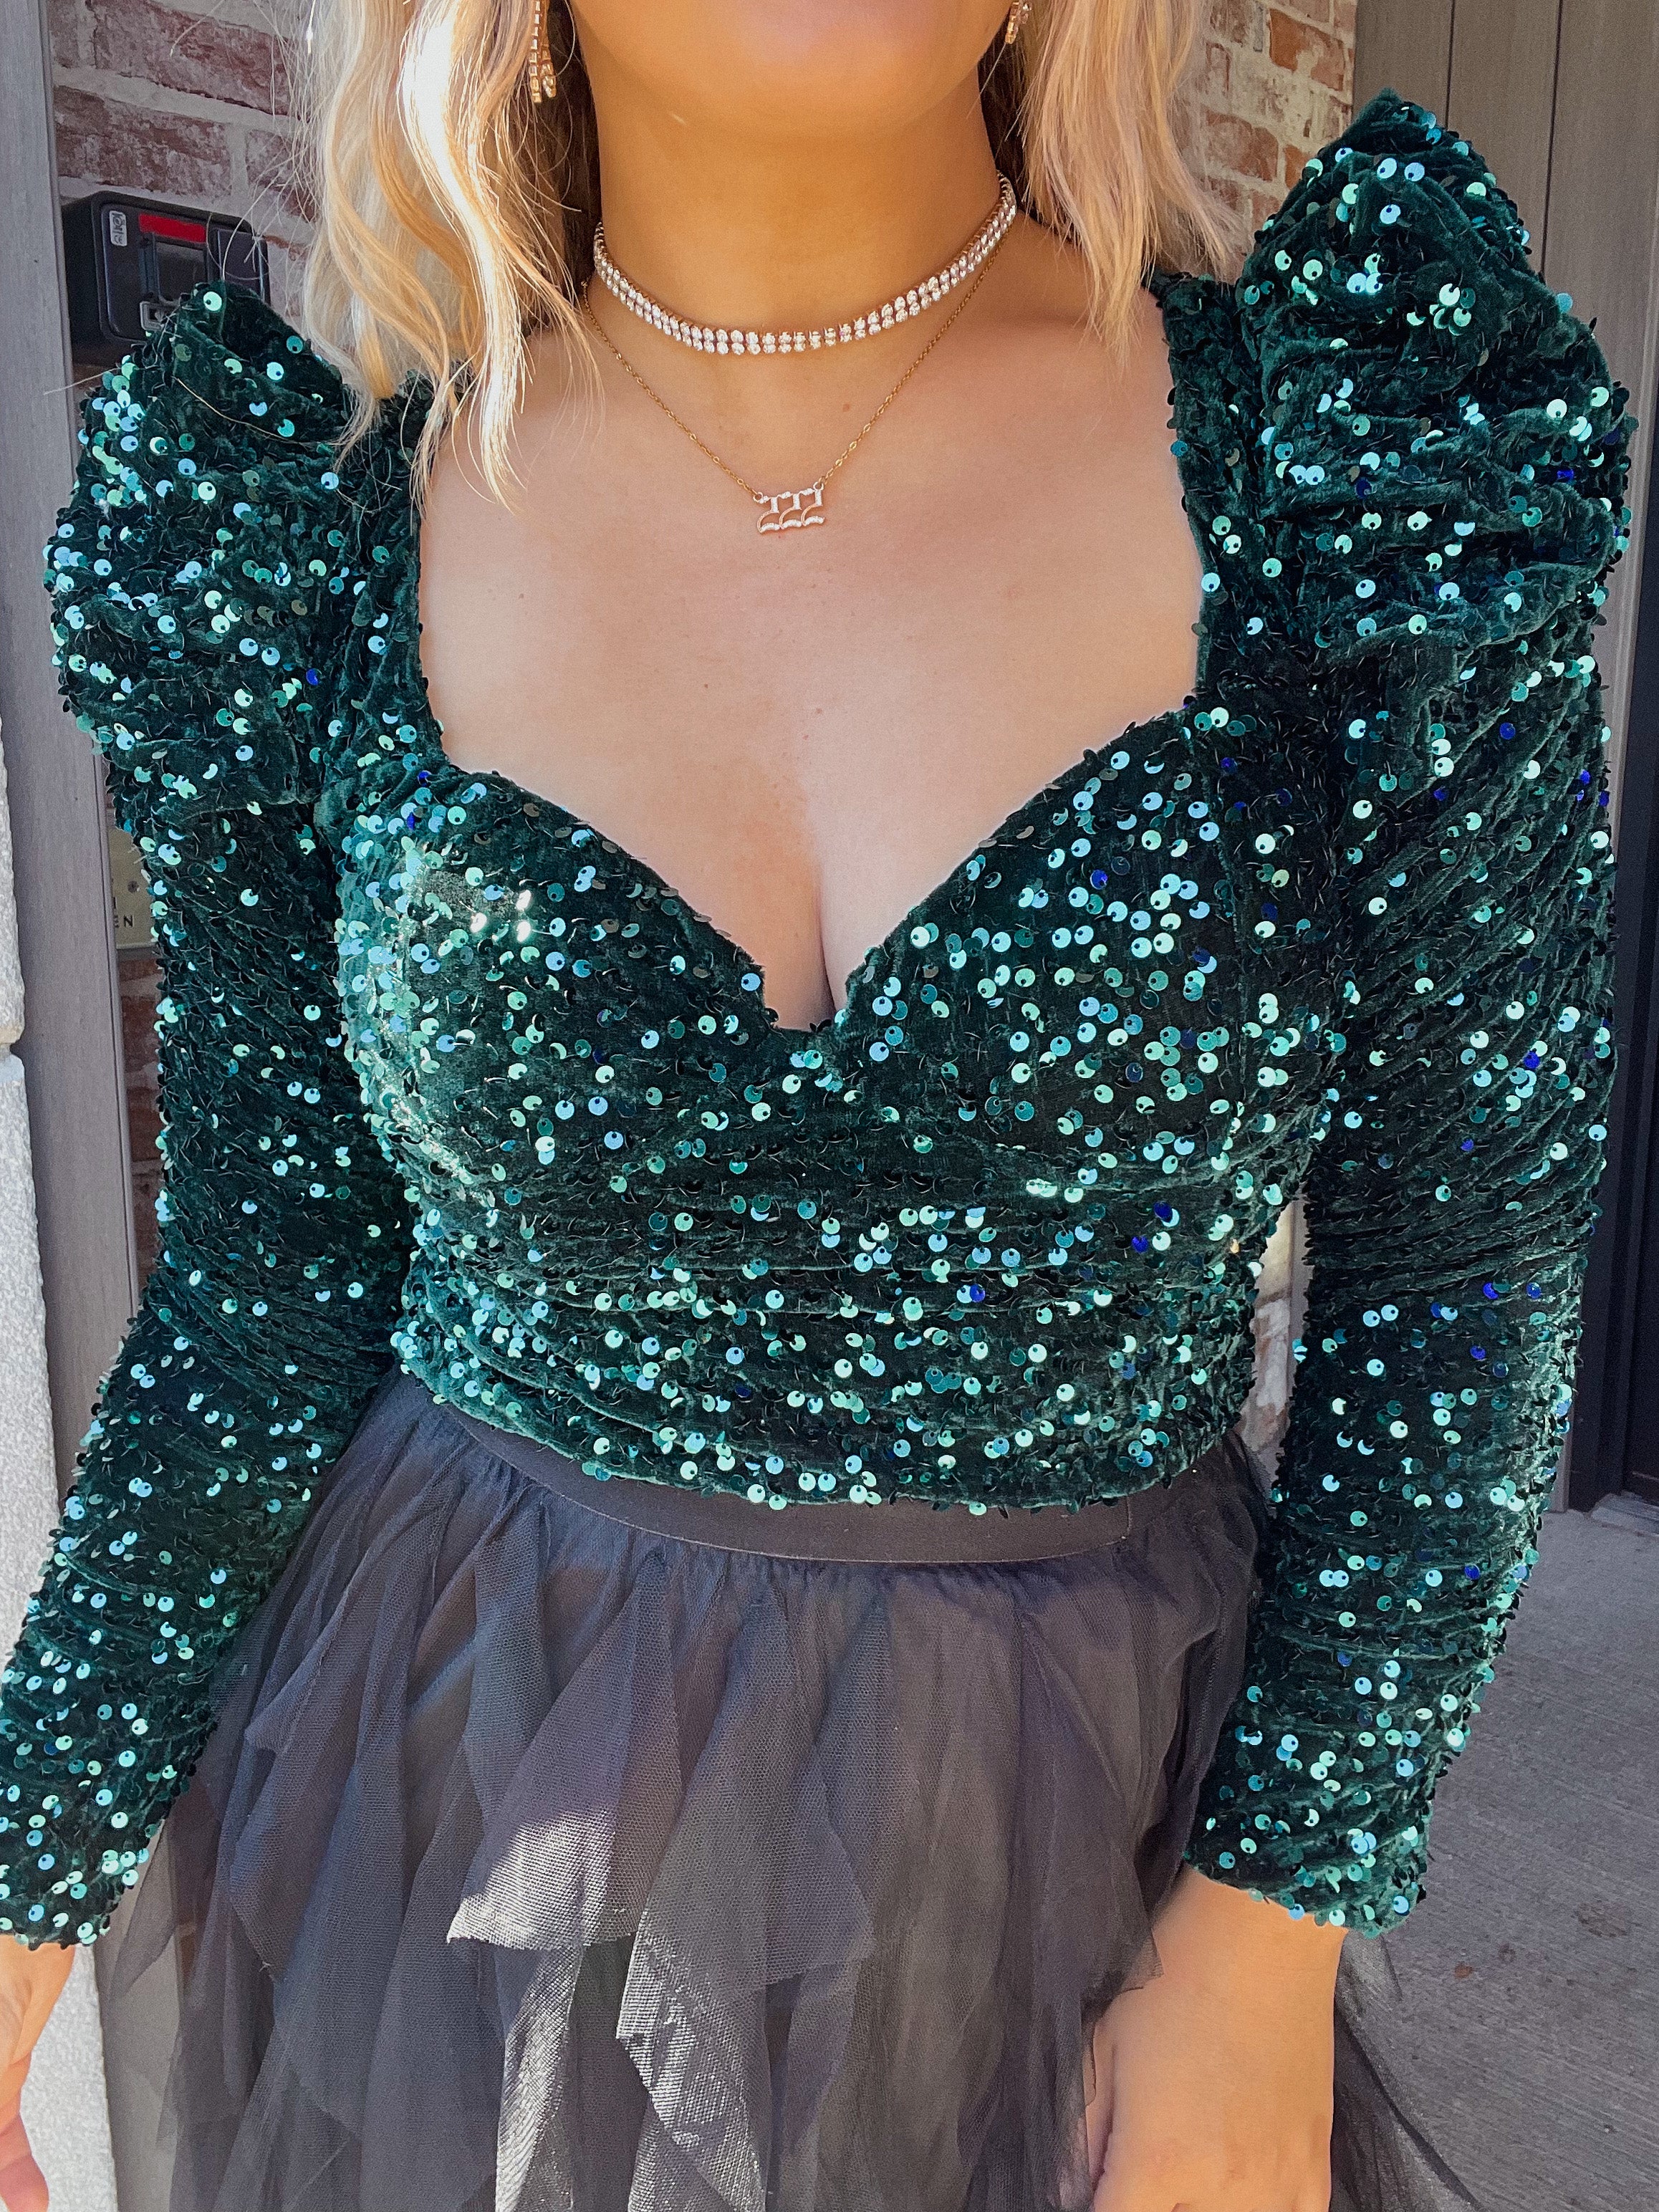 Sassy Sequin Bodysuit - Emerald